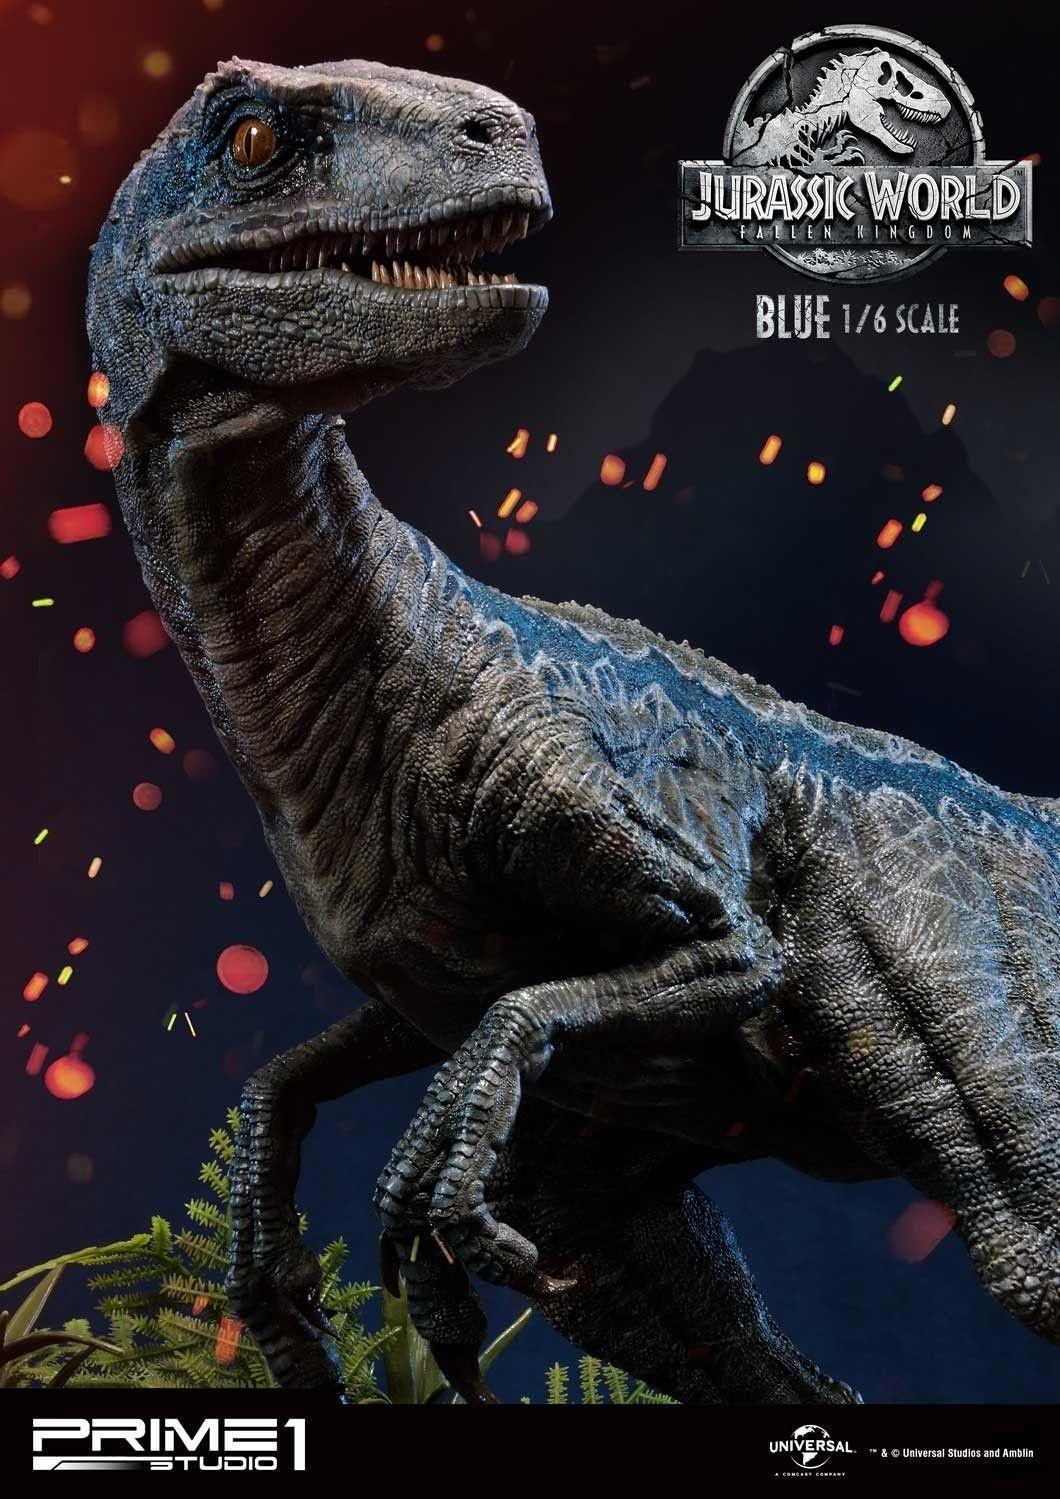 Jurassic park world, Blue jurassic world.com